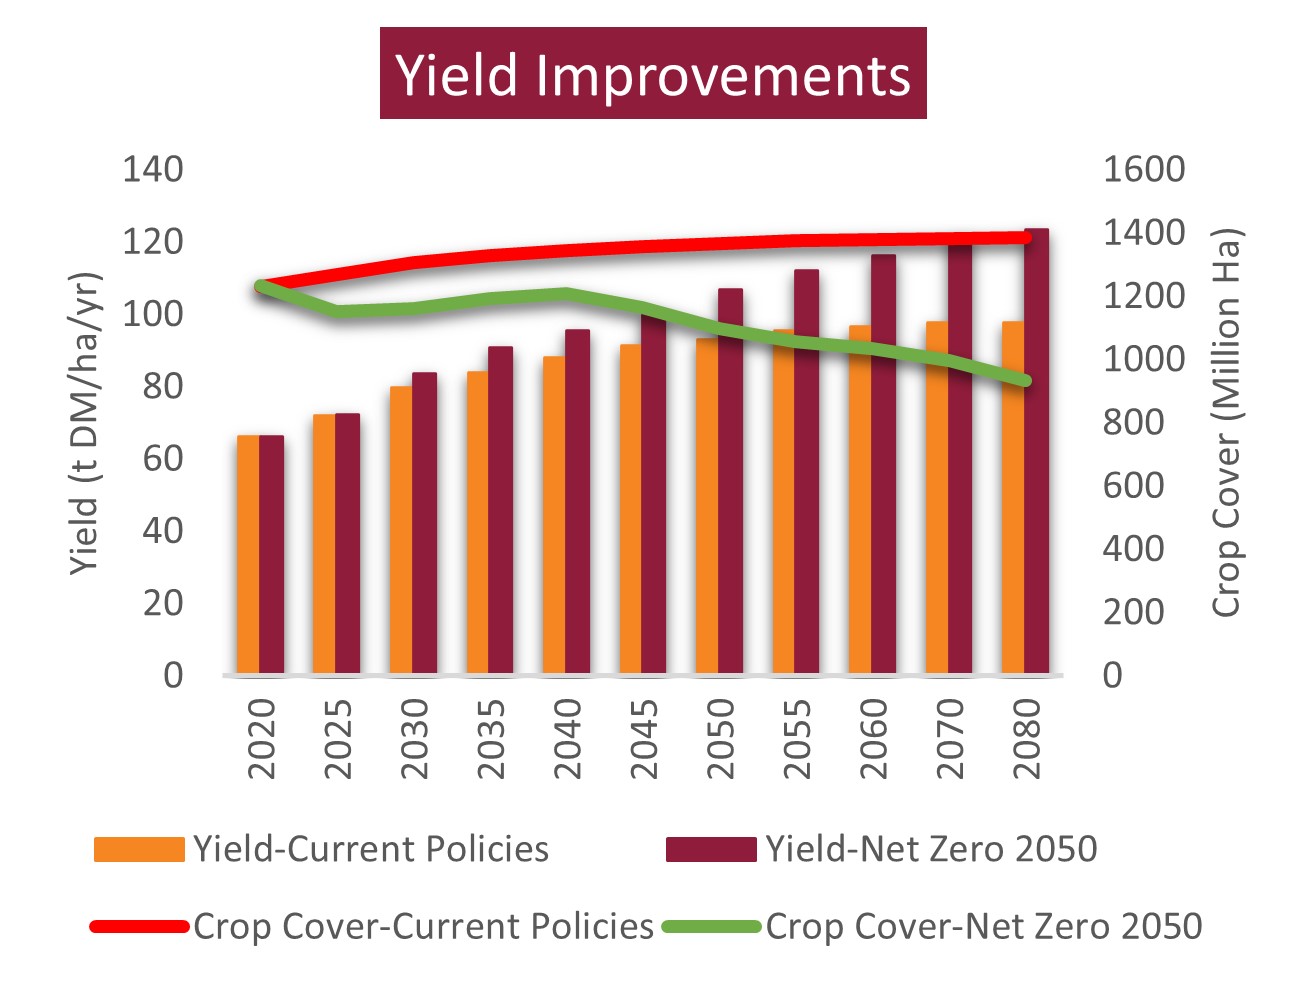 Yield improvements